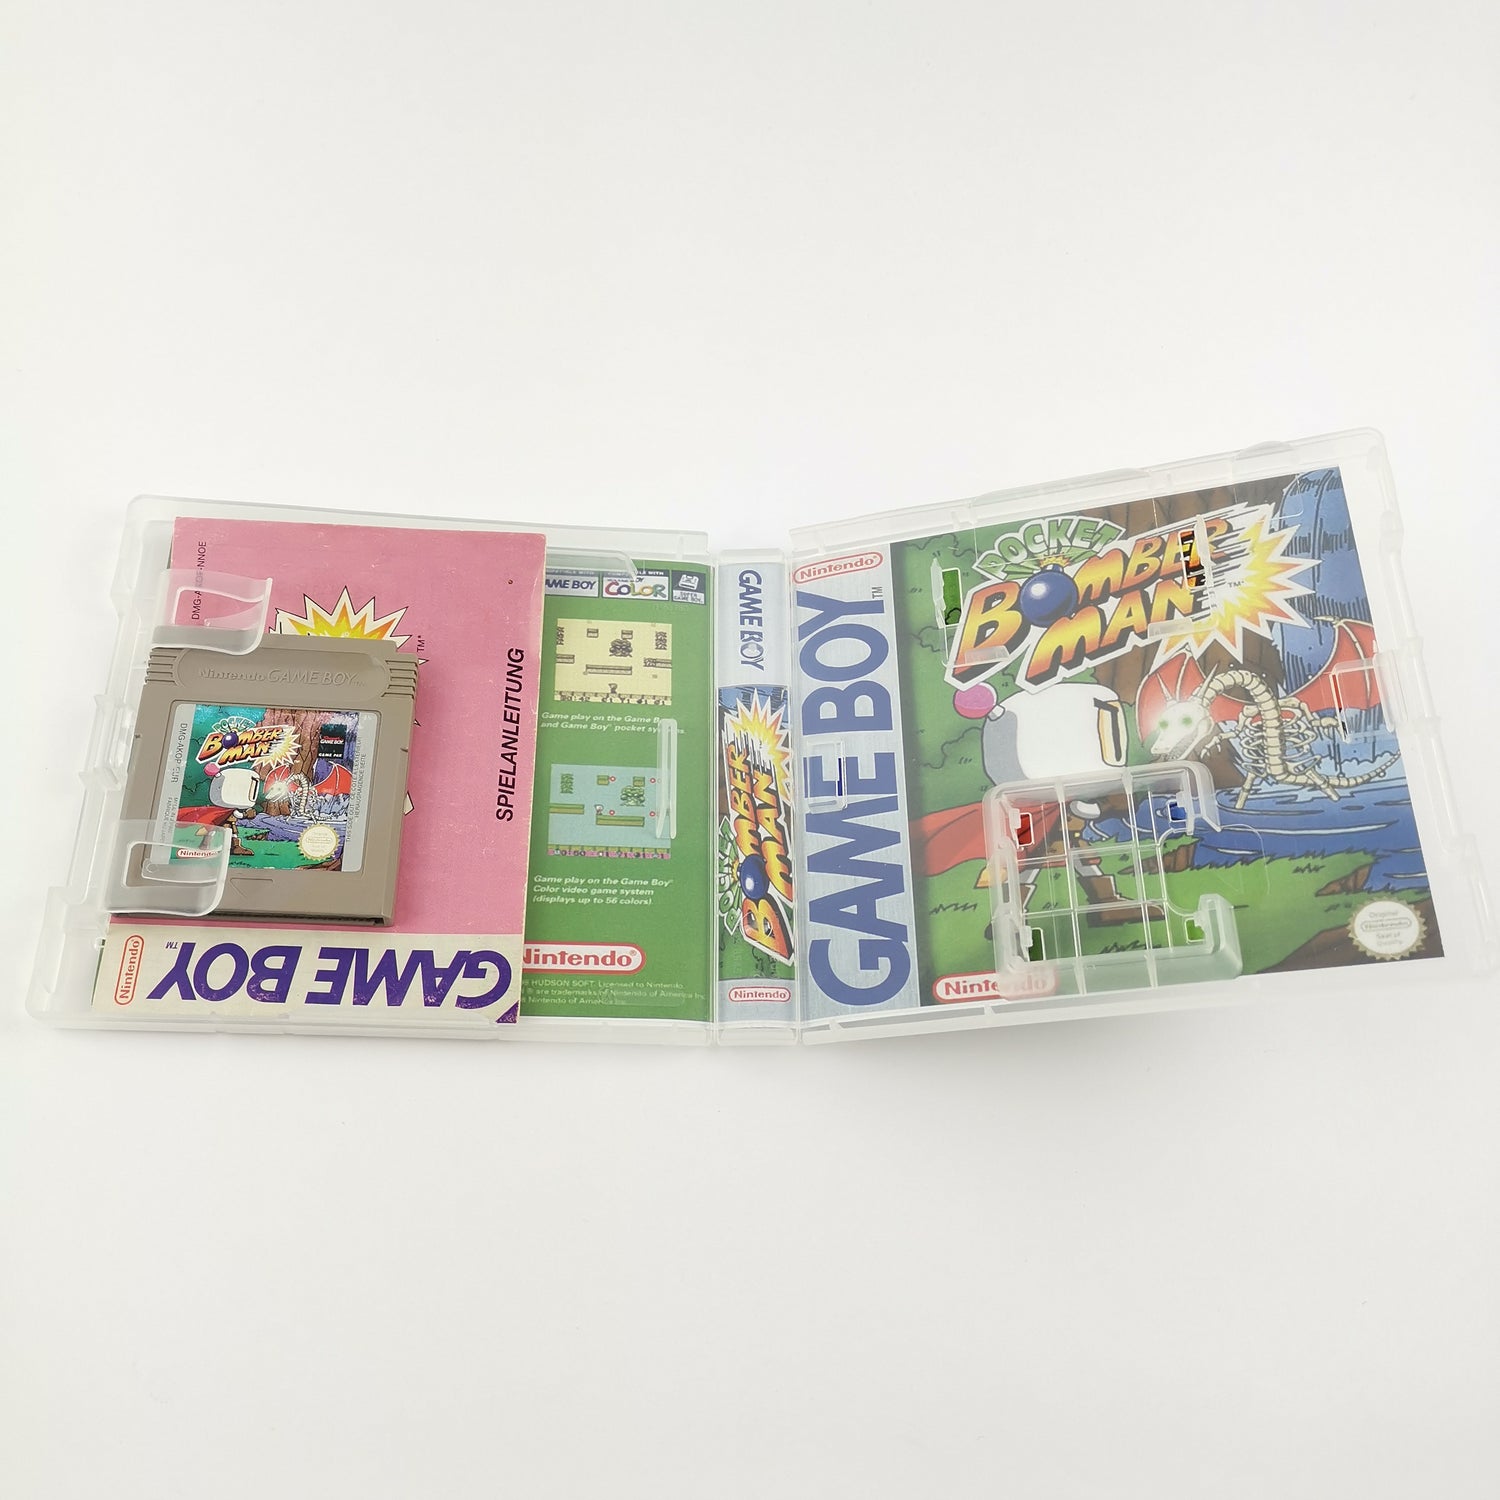 Nintendo Game Boy Classic Spiel : Pocket Bomber Man - Modul + Anleitung PAL EUR